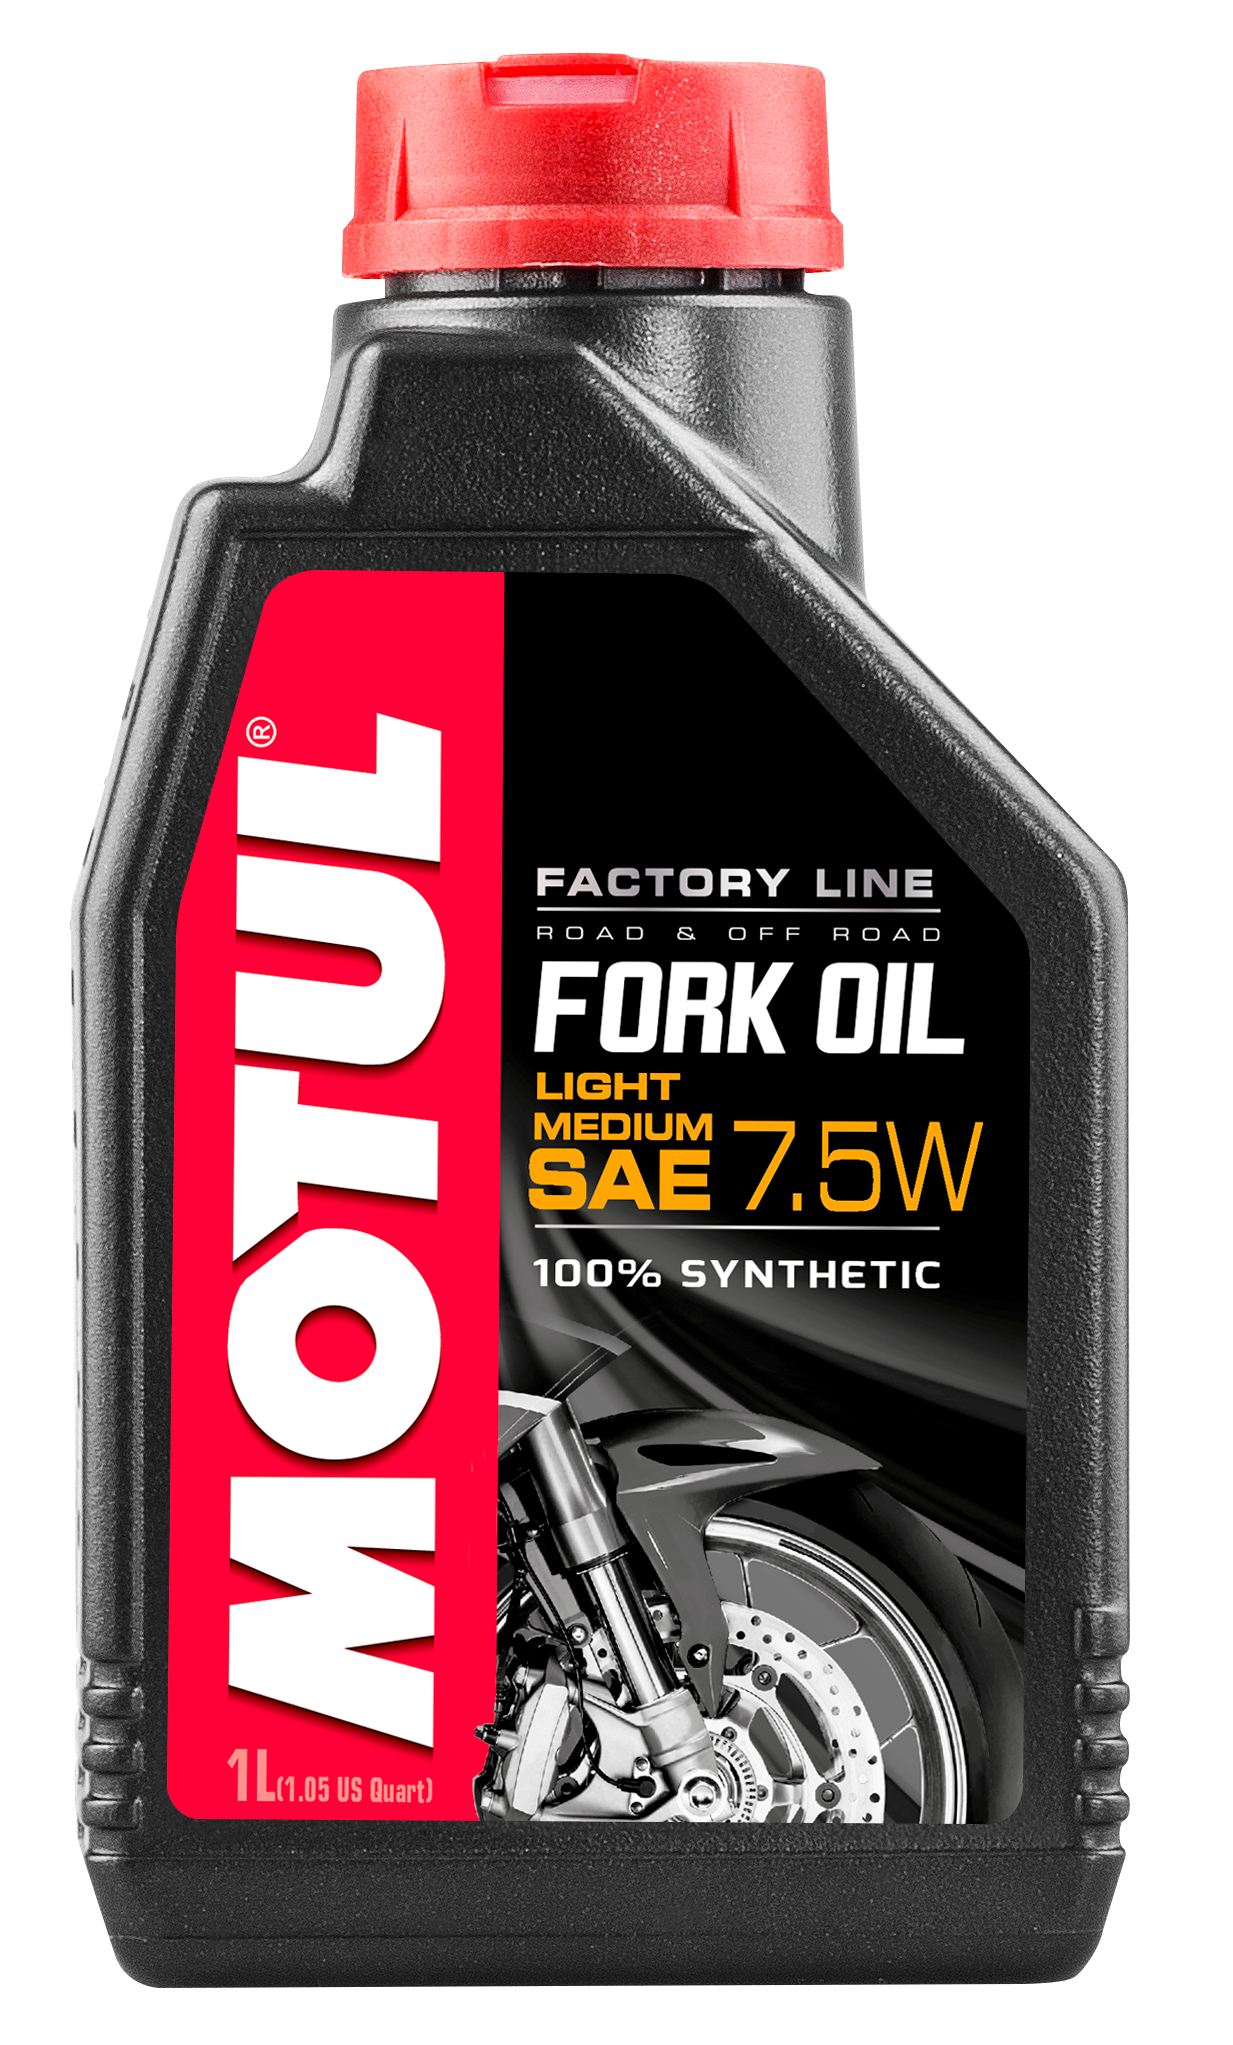 Motul Forkoil Factory Line 7,5W, 1 liter